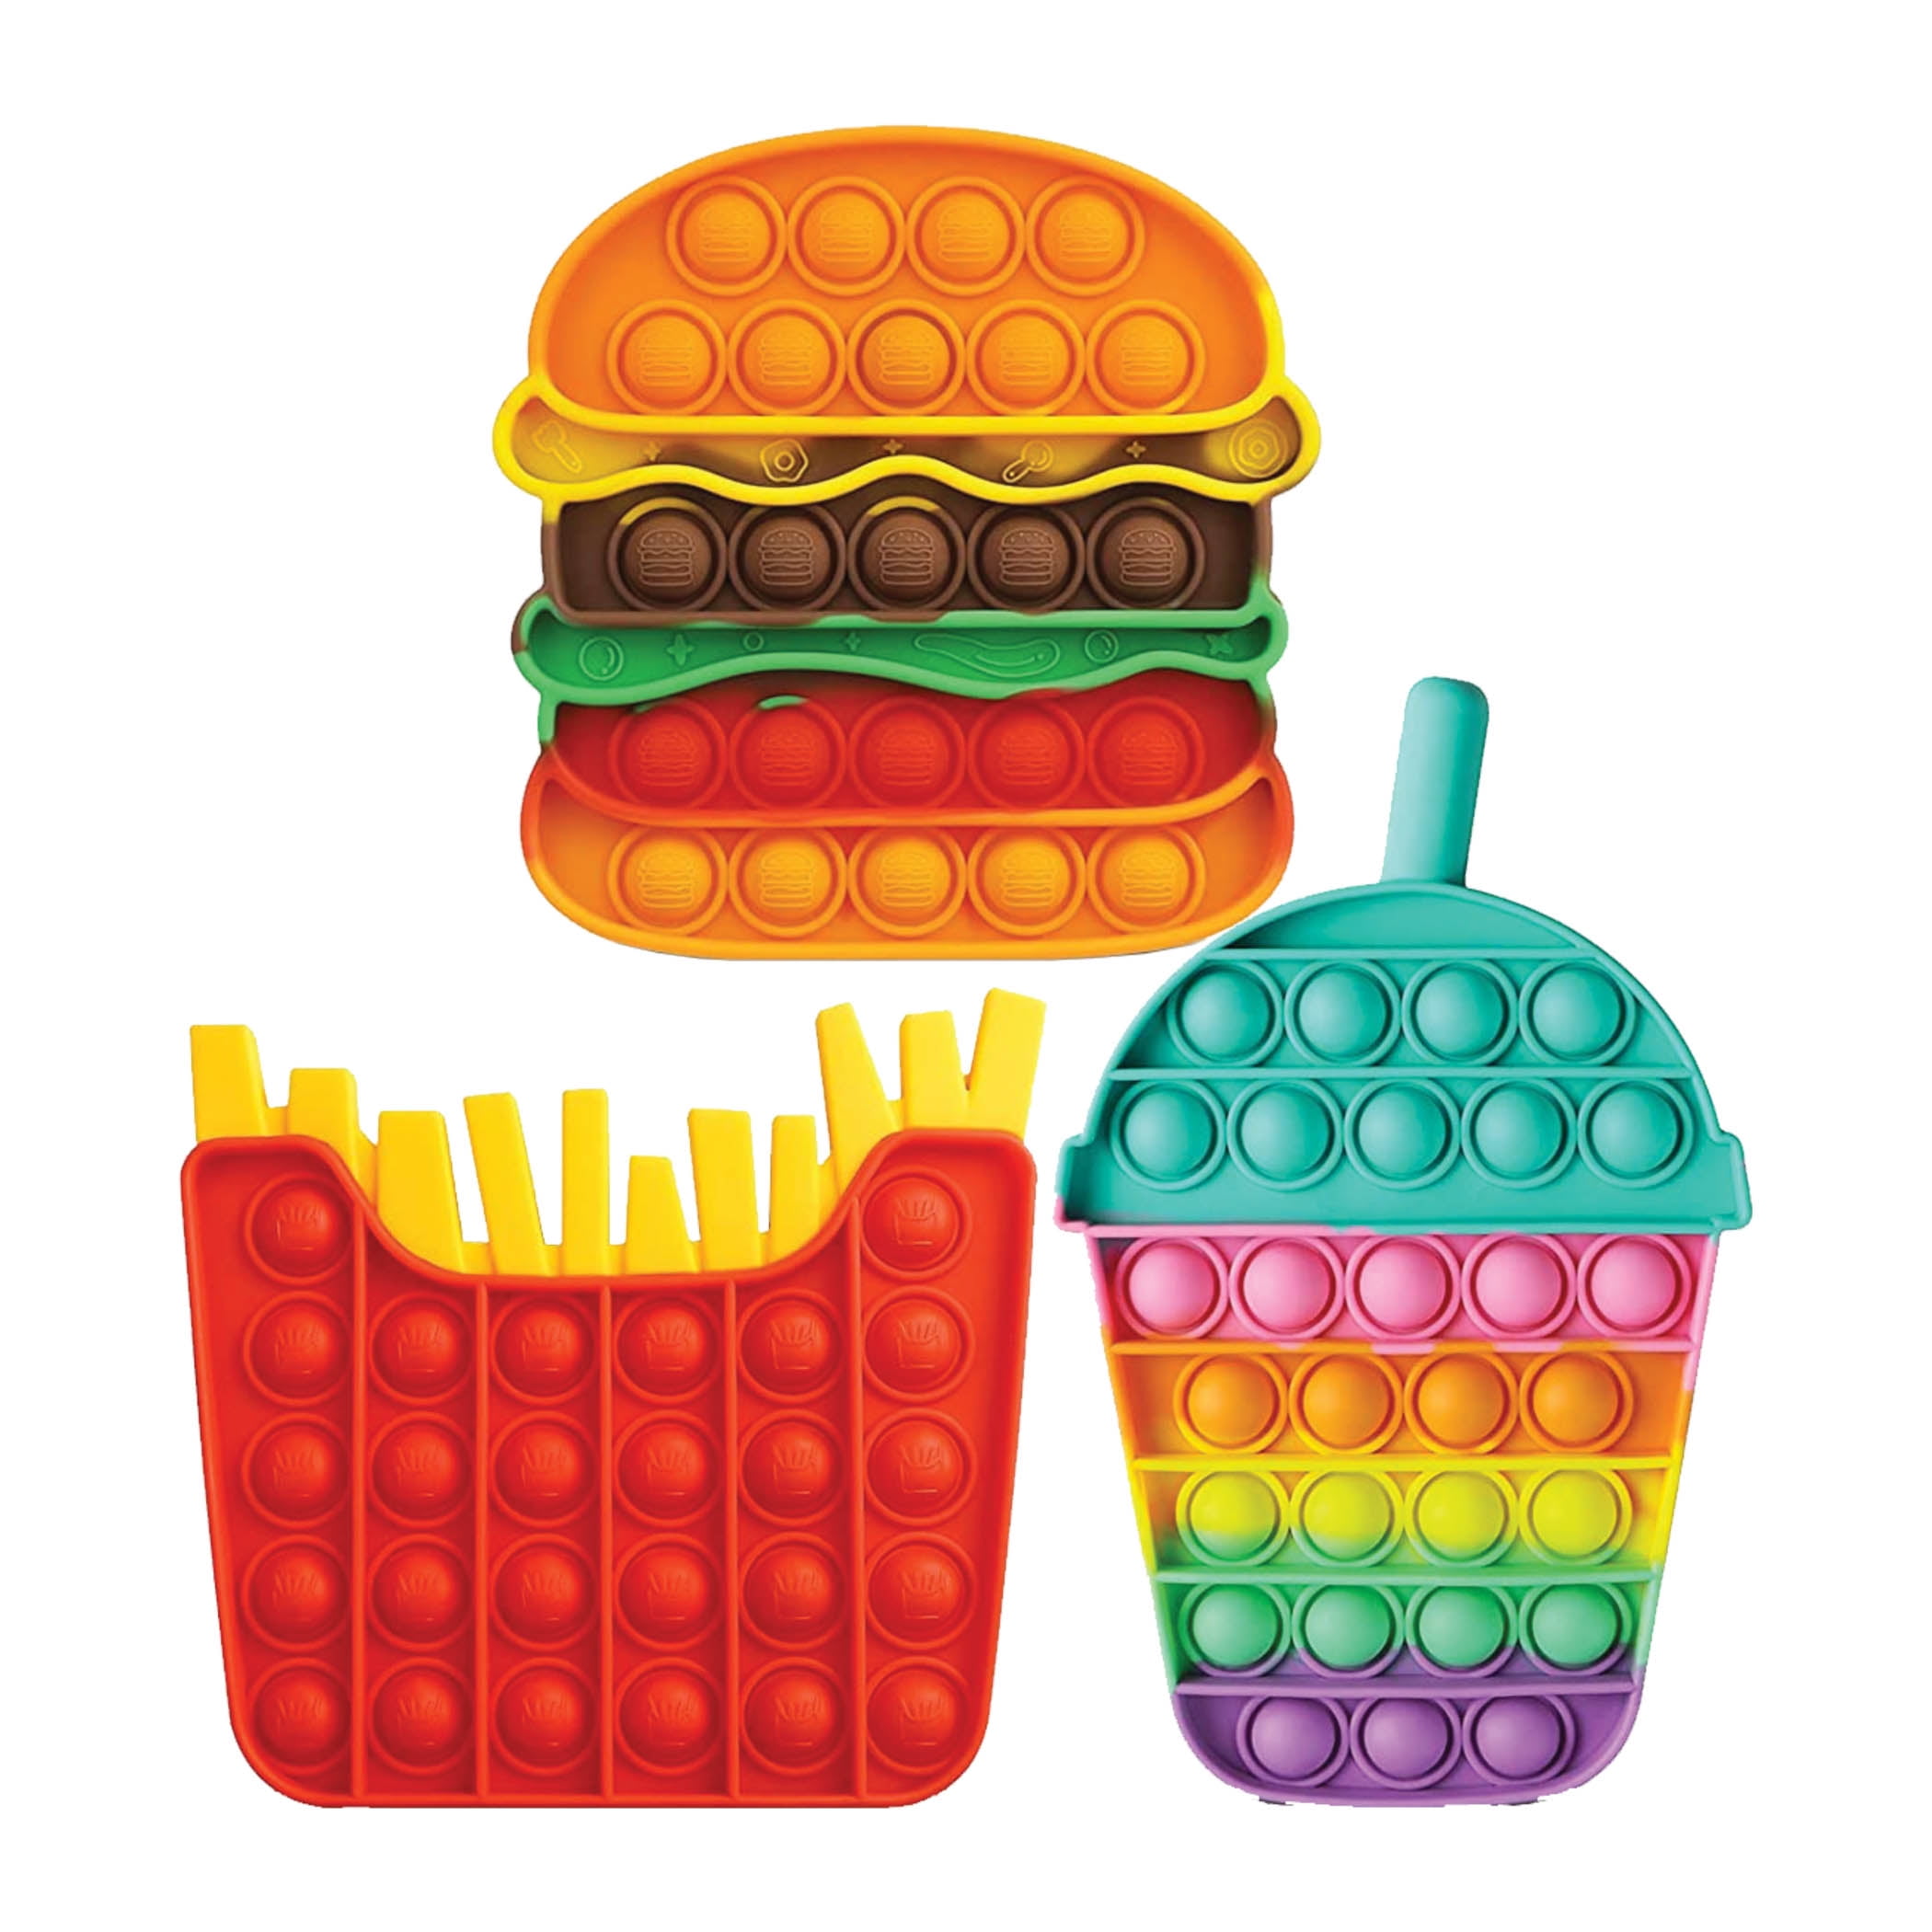 Zappeln Popular Stressabbau Spielzeug Pommes Frites Burger Bubble Sensory 3pack 